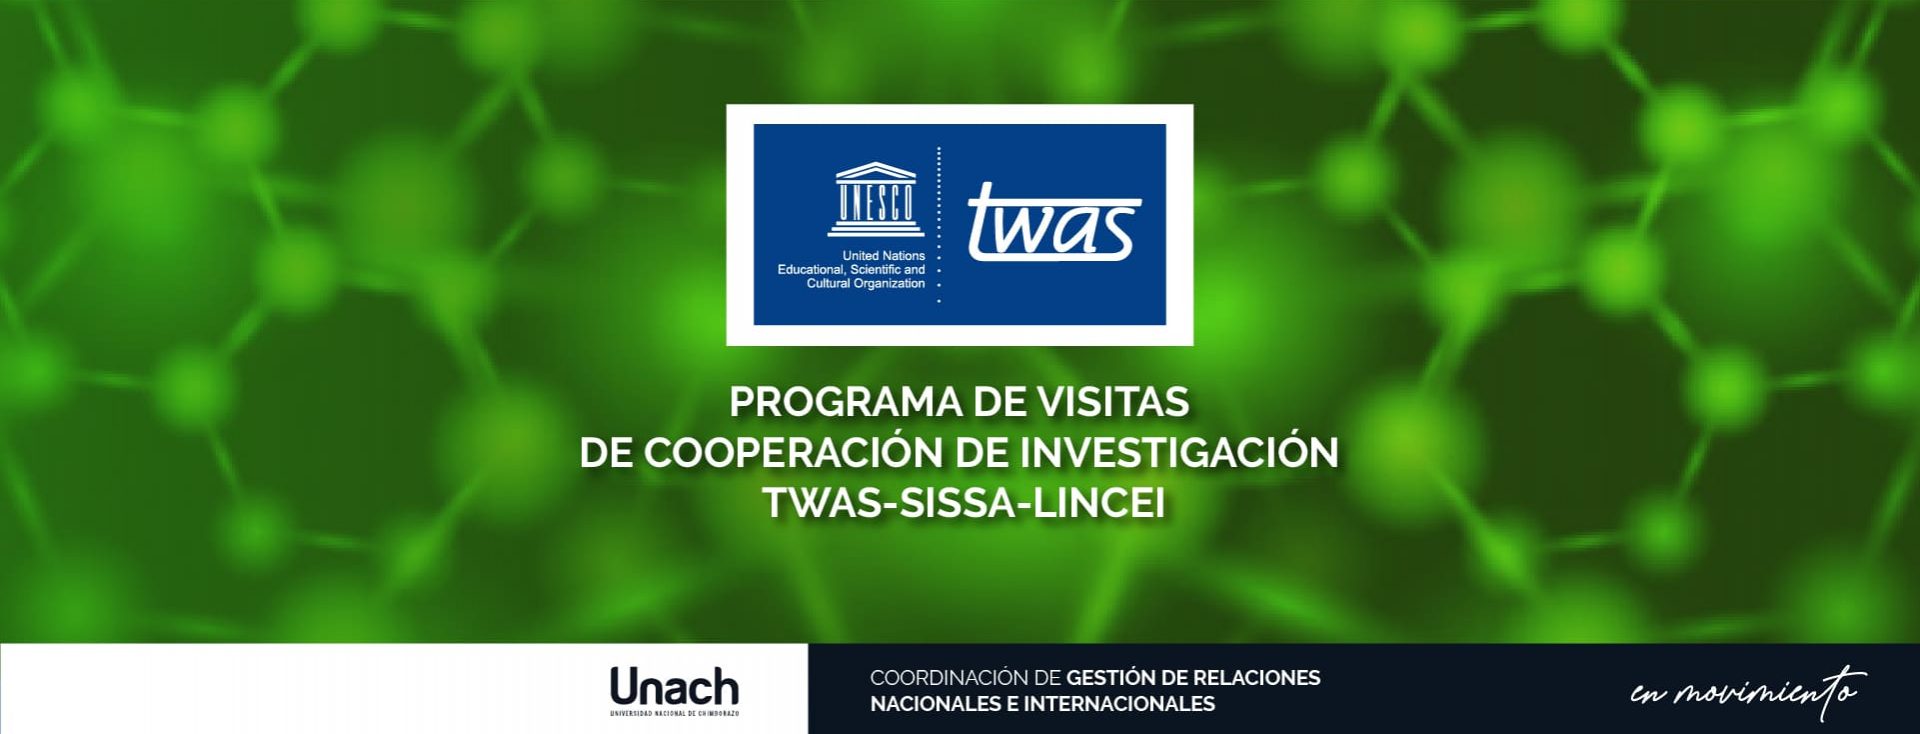 PROGRAMA DE VISITAS DE COOPERACIÓN DE INVESTIGACIÓN TWAS-SISSA-LINCEI